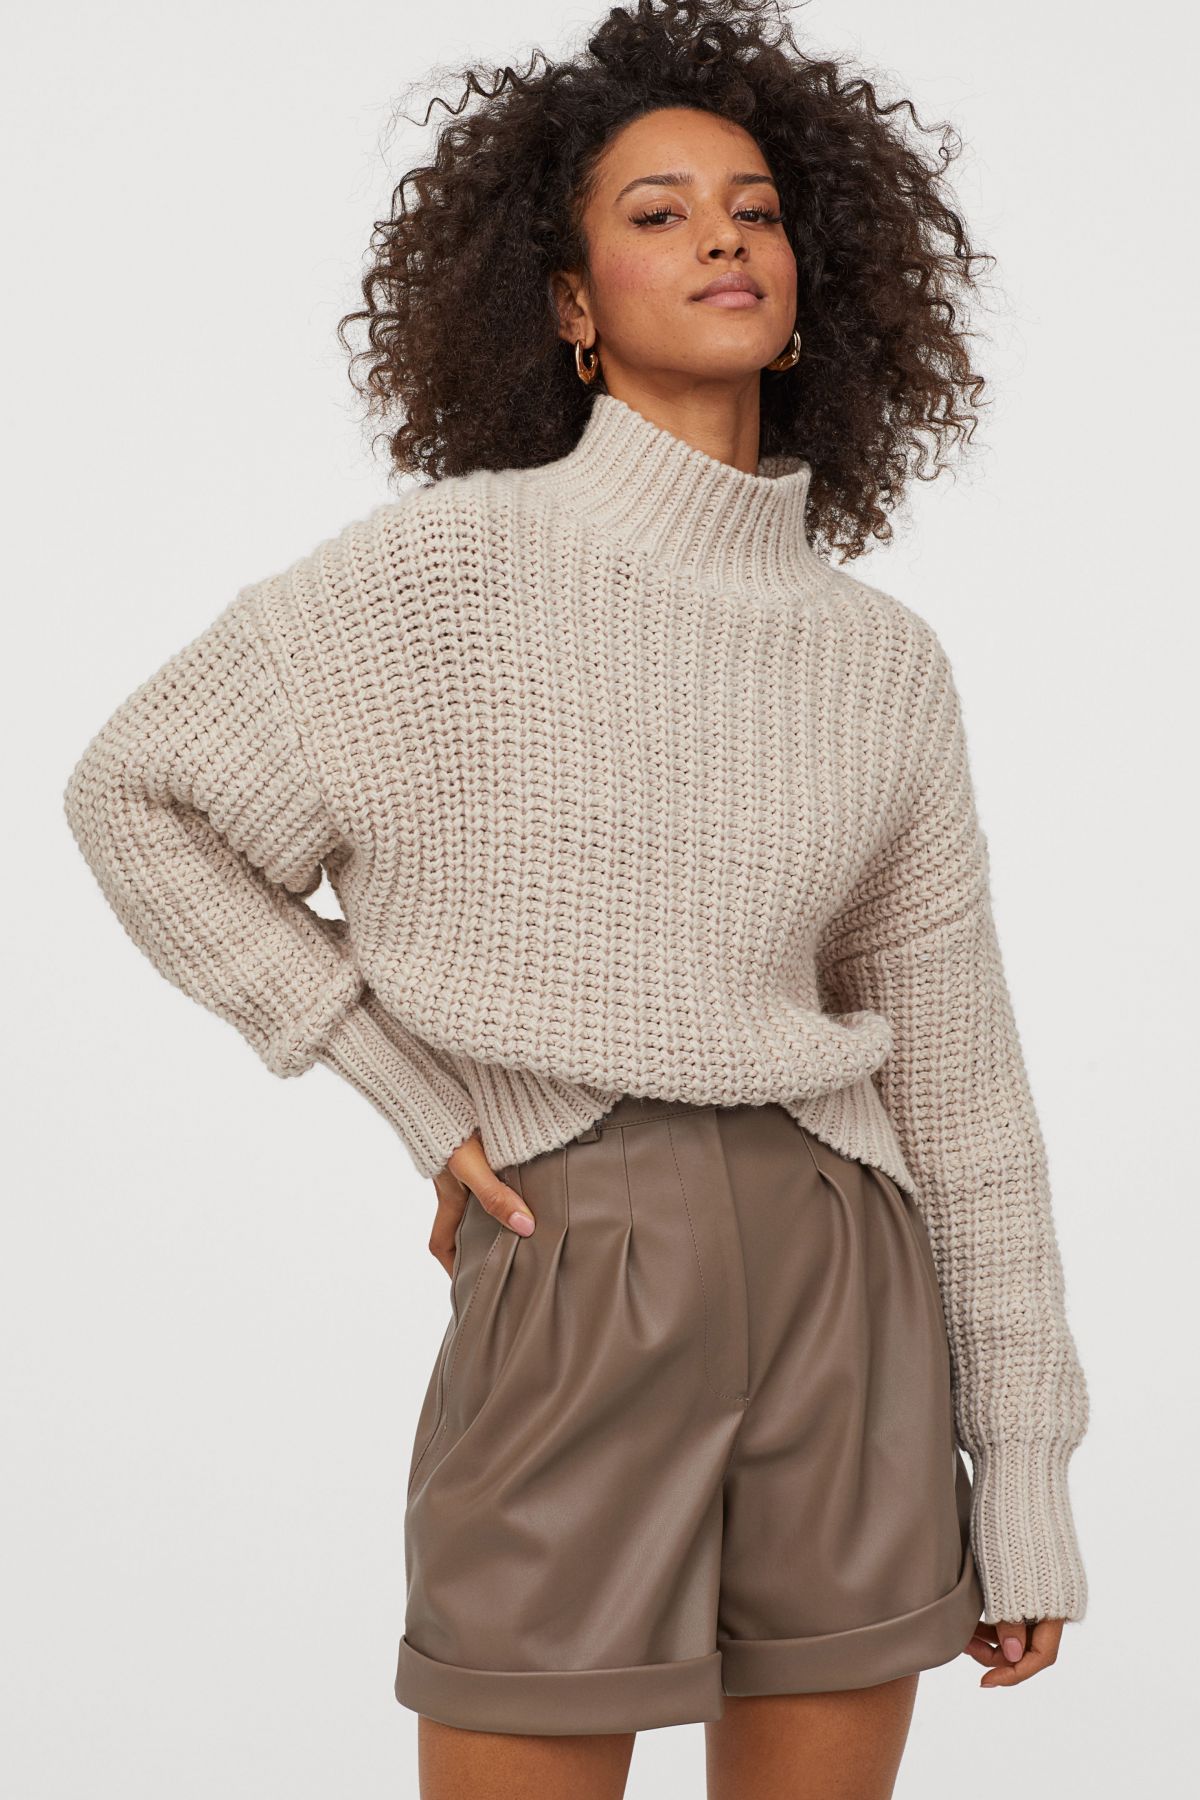 FLORA CARTER for H&M, December 2019 – HawtCelebs